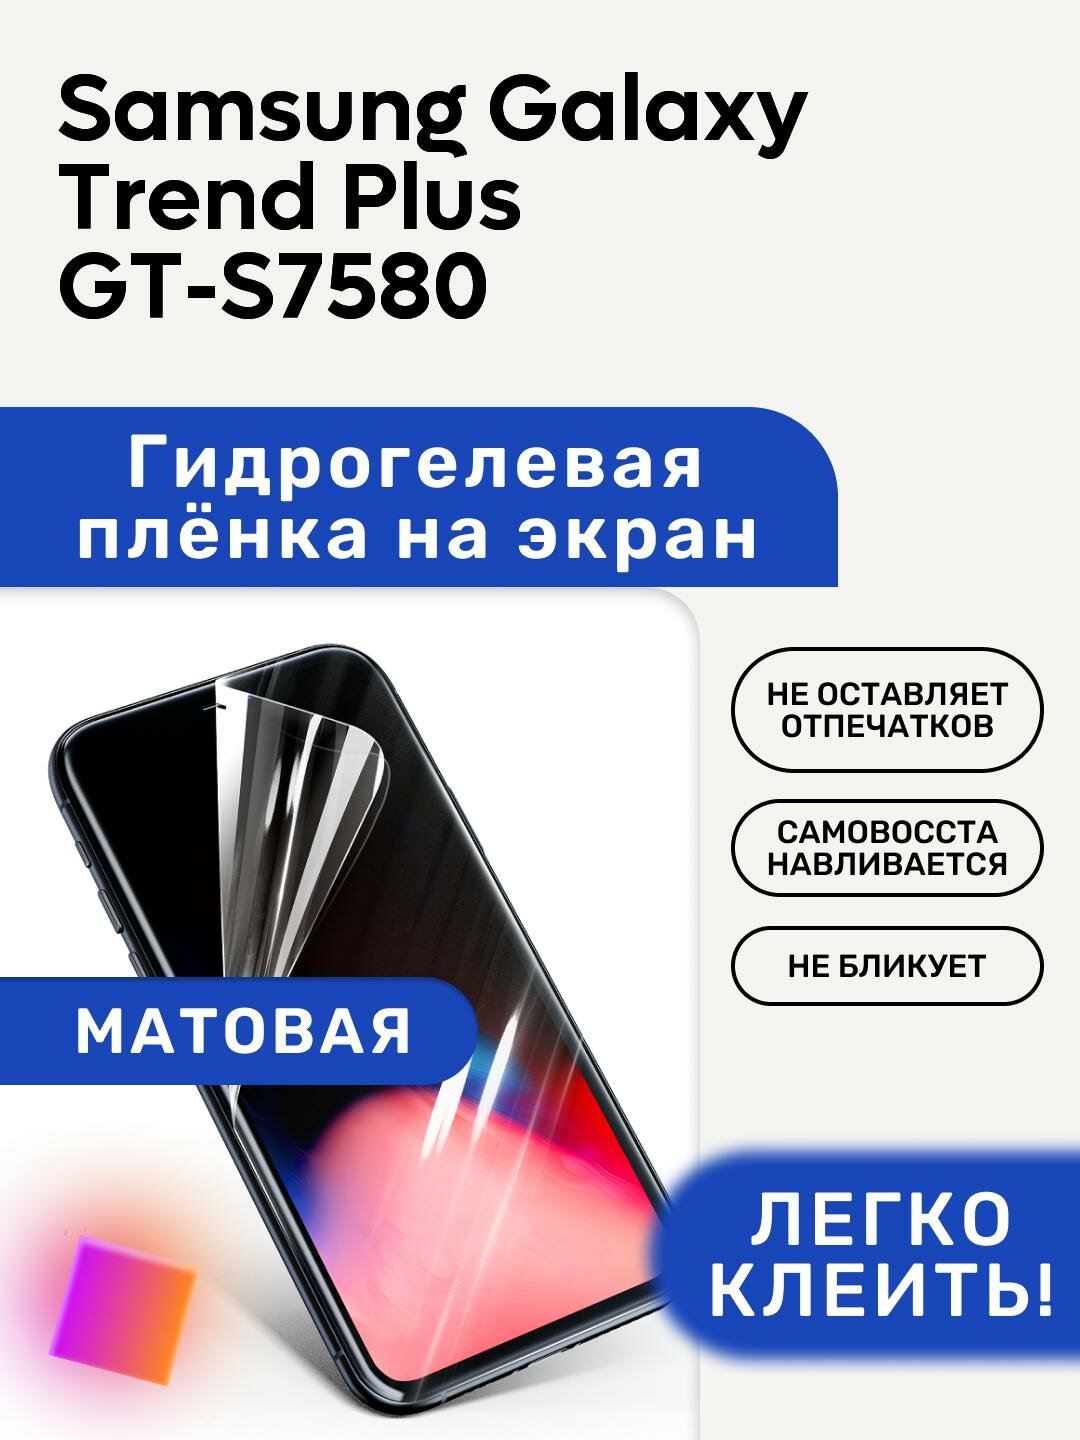 Матовая Гидрогелевая плёнка, полиуретановая, защита экрана Samsung Galaxy Trend Plus GT-S7580